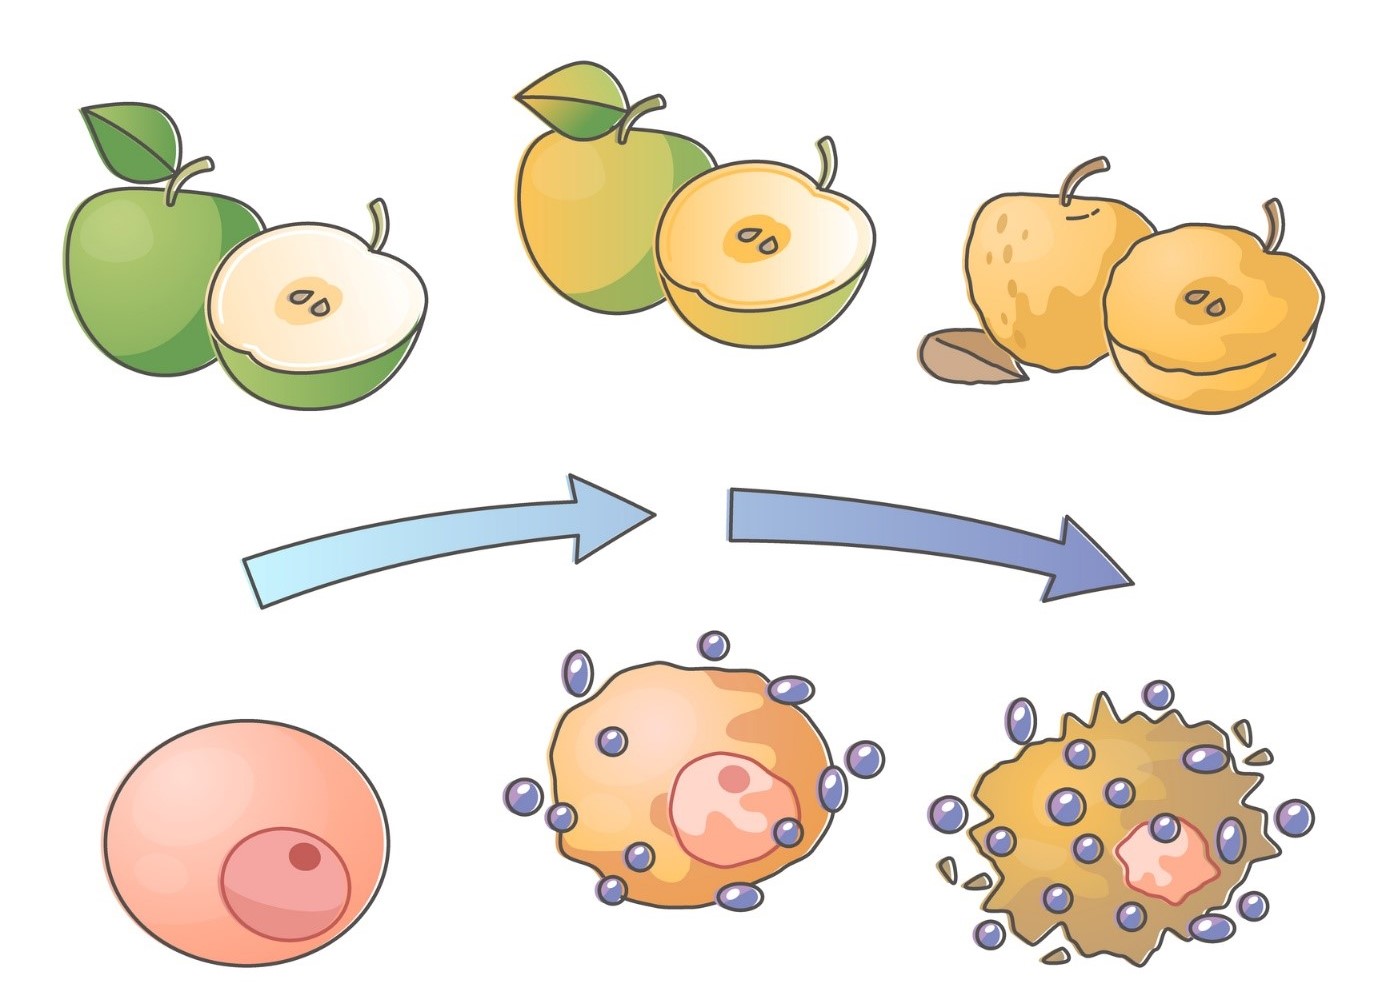 Oxidačný stres - znázornenie rozpadu jablka a bunky